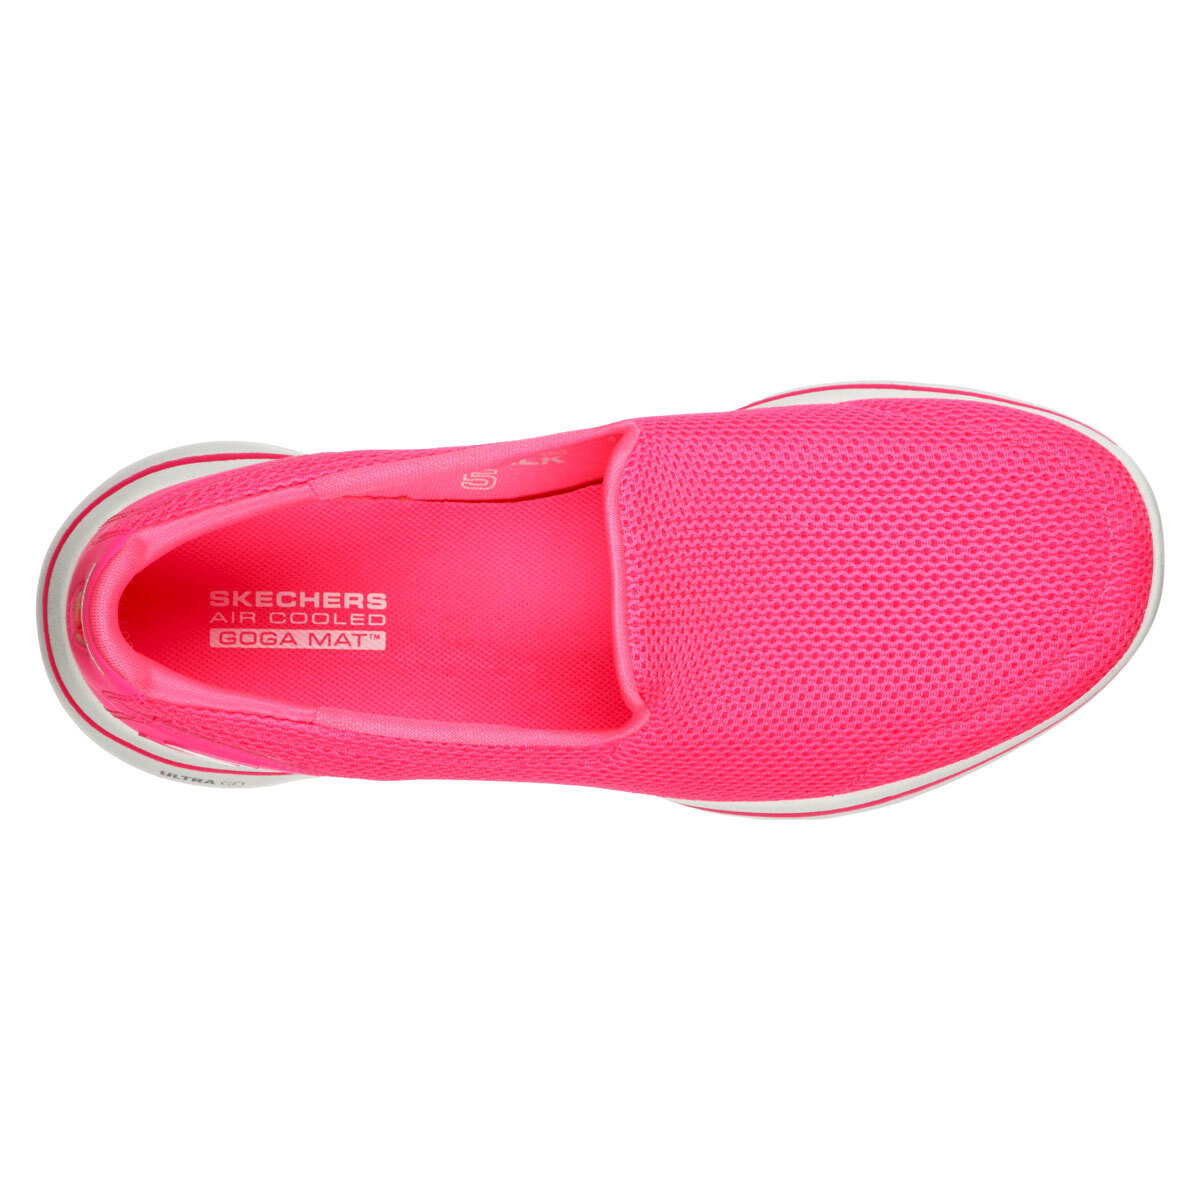 Skechers GOwalk 5 Honor Women's Shoes in Pink